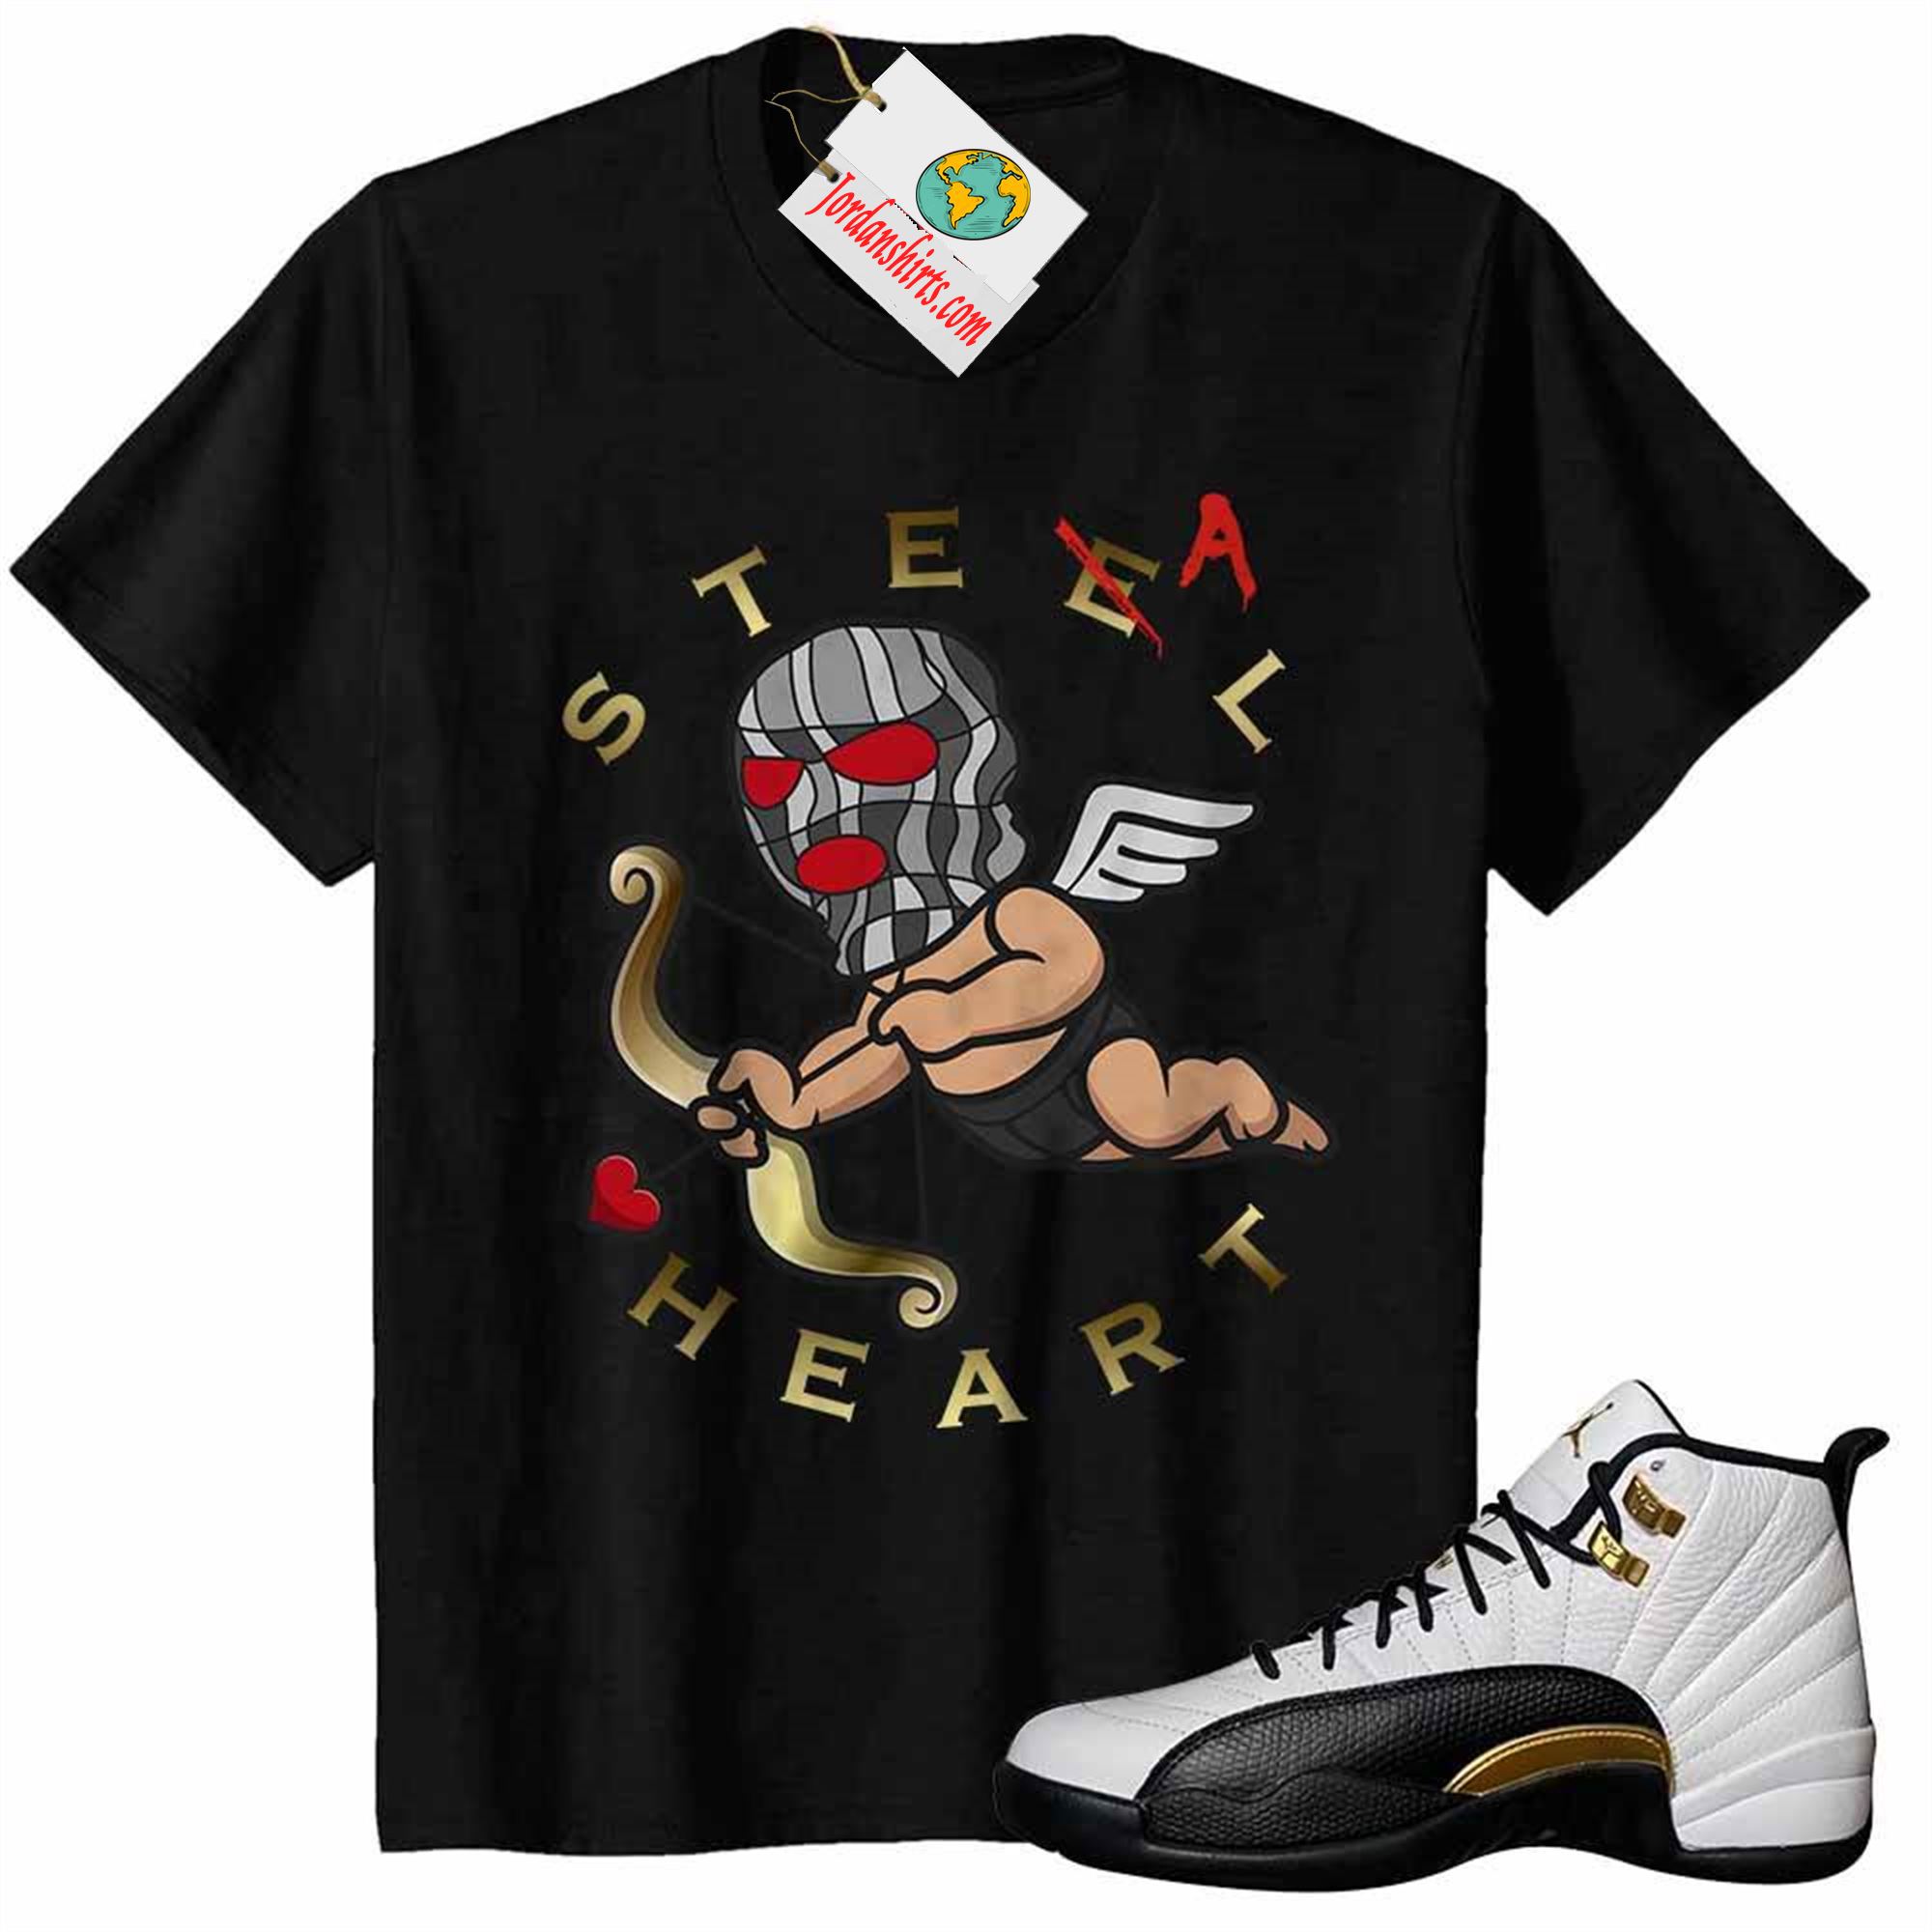 Jordan 12 Shirt, Steel Steal Heart Cupid Gangster Angel Ski Mask Black Air Jordan 12 Royalty 12s Plus Size Up To 5xl